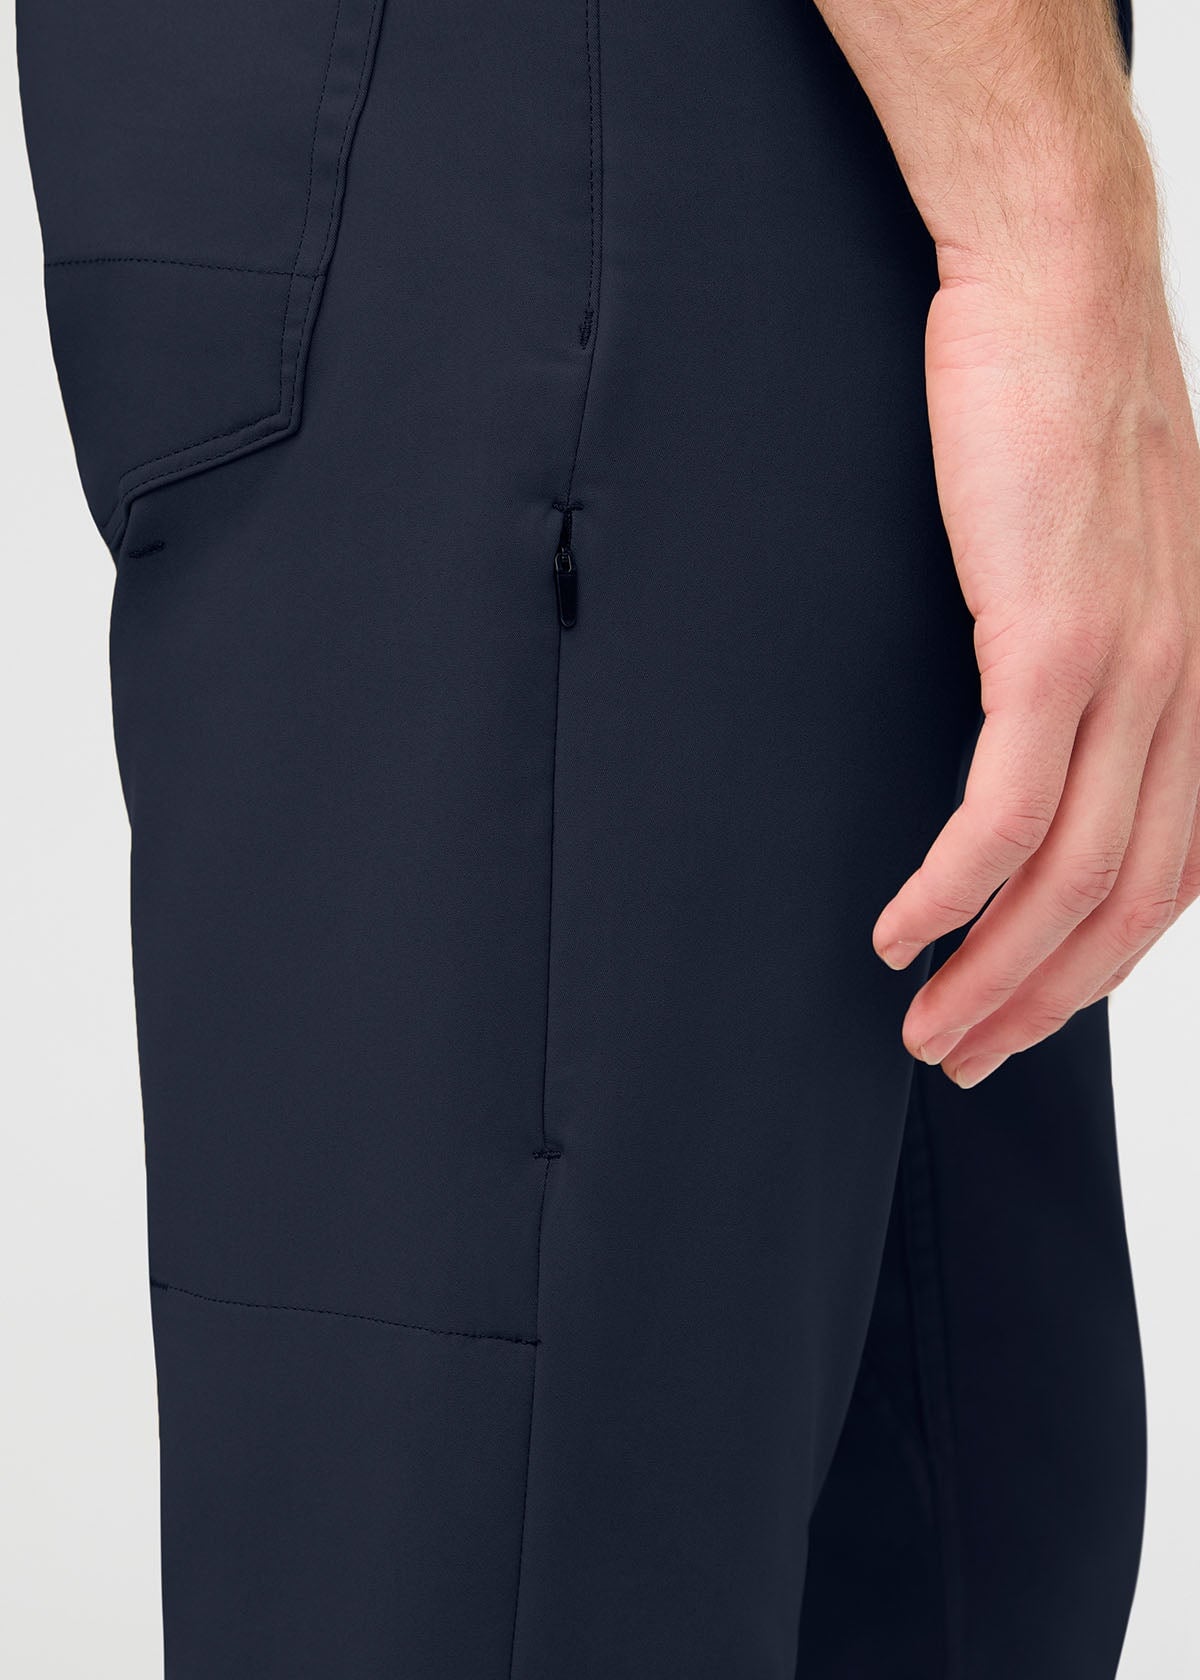 mens navy slim fit stretch pant zip thigh pocket